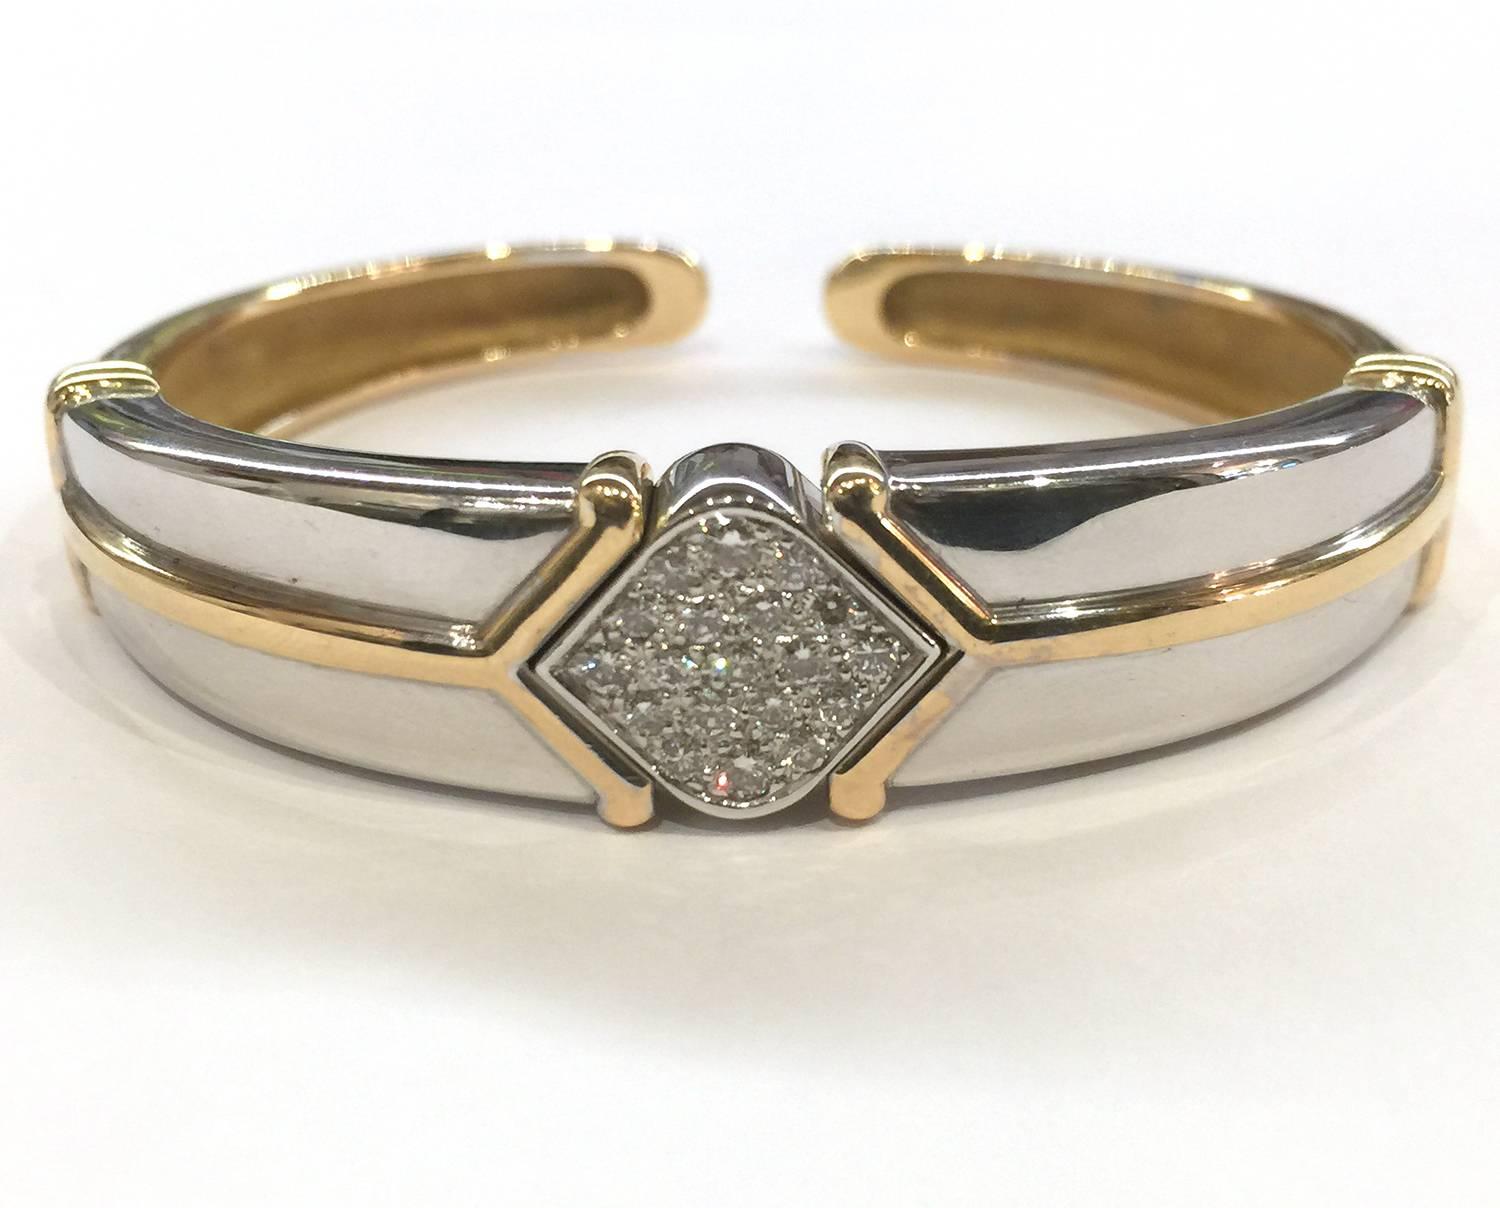 Contemporary hermes Two Color diamond Gold bracelet